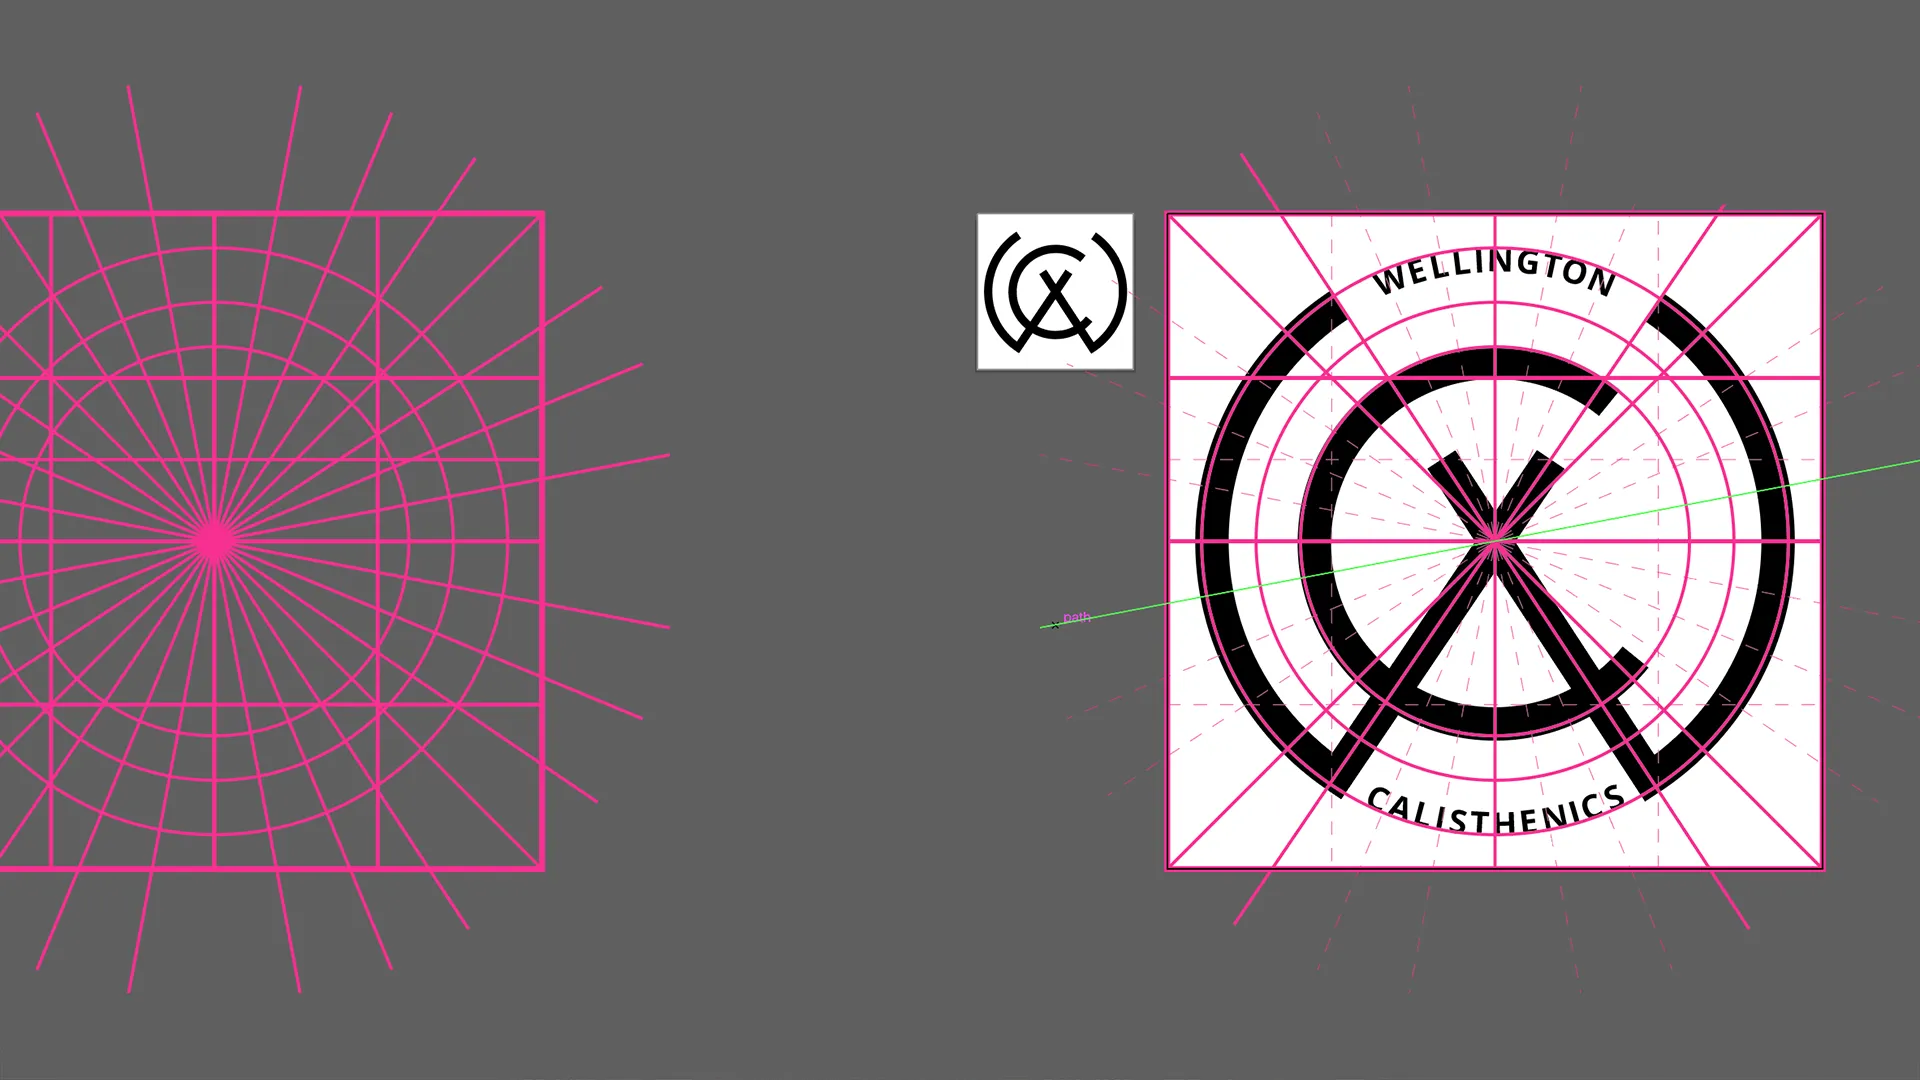 Work in progress, behind the Wellington Calisthenics logomark